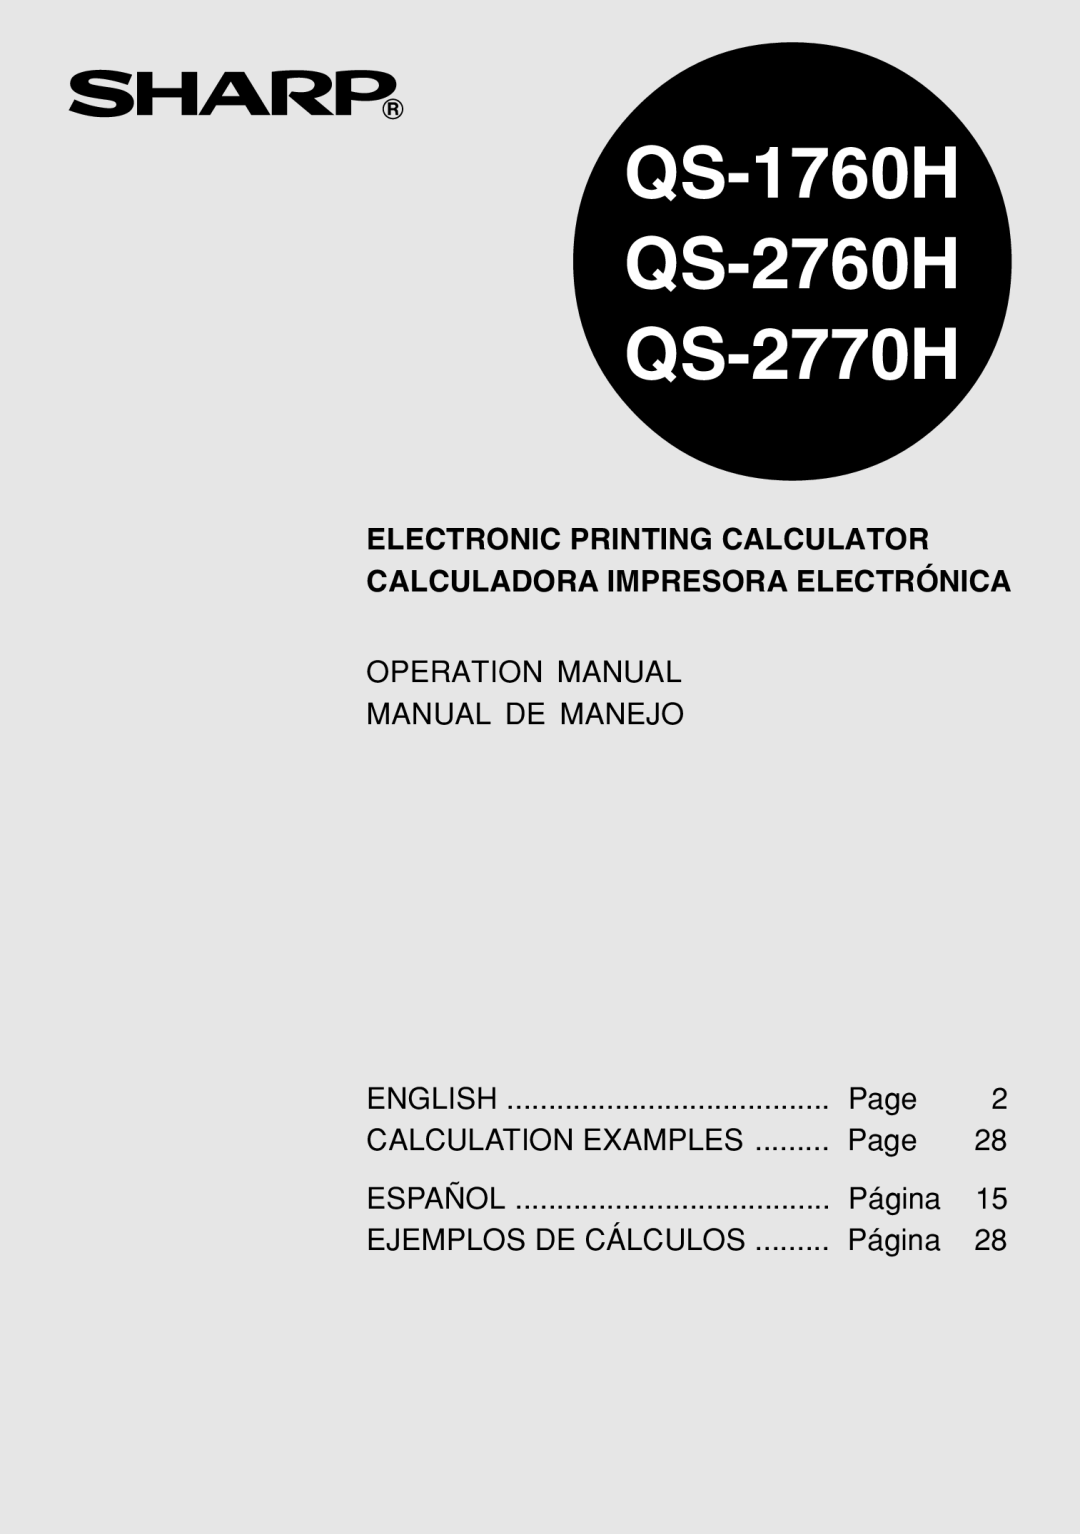 Sharp QS-2760H operation manual Electronic Printing Calculator Calculadora Impresora Electrónica, Español, English, Page 